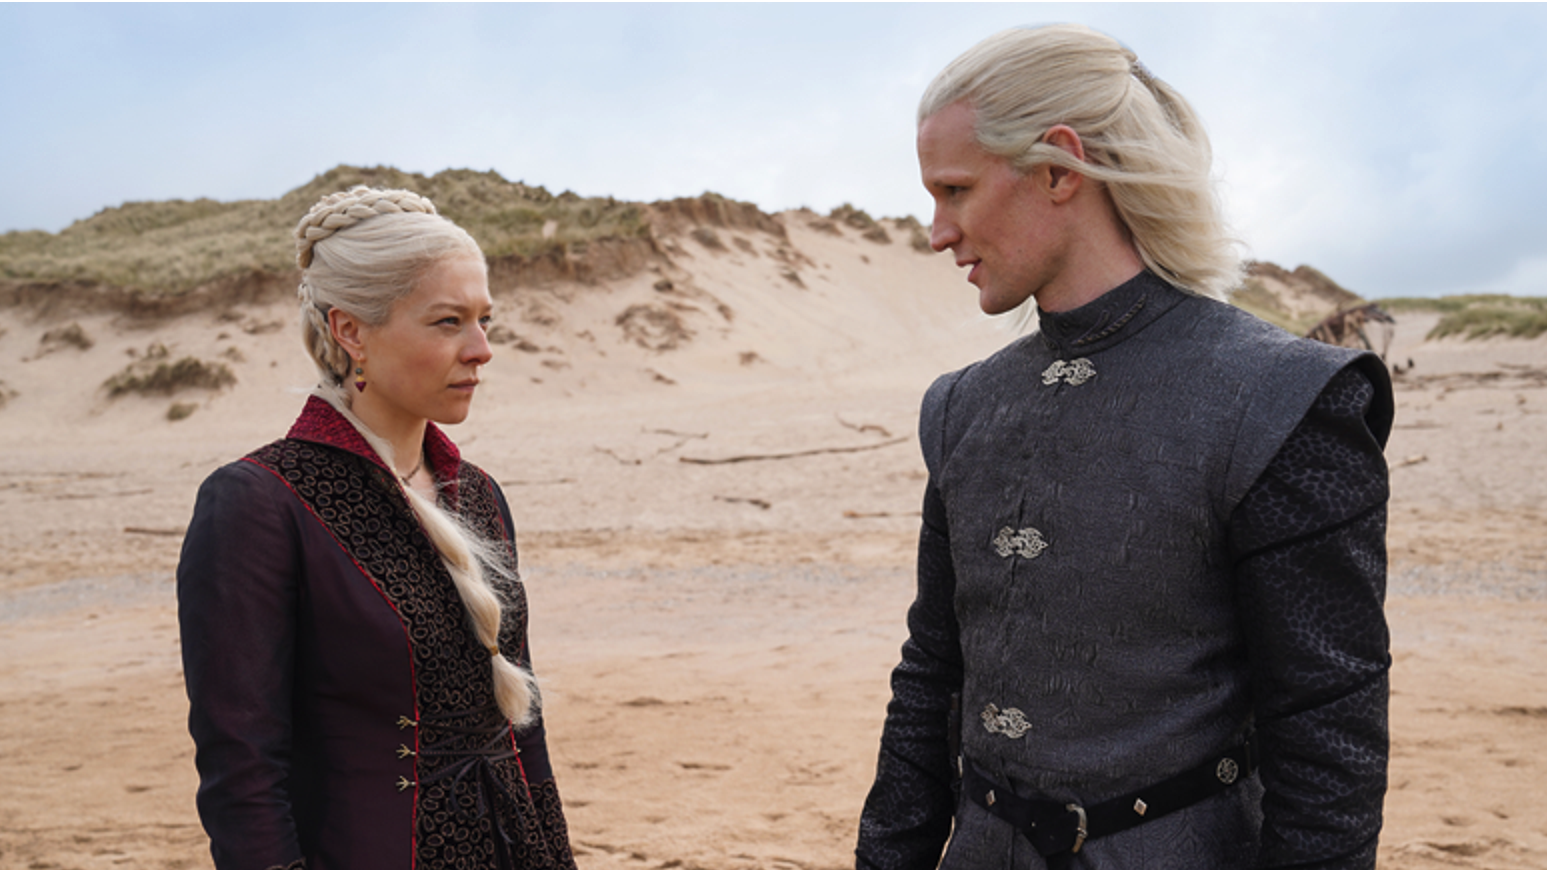 Emma D'Arcy as Princess Rhaenyra Targaryen and Matt Smith as Prince Daemon Targaryen. (Image: HBO)